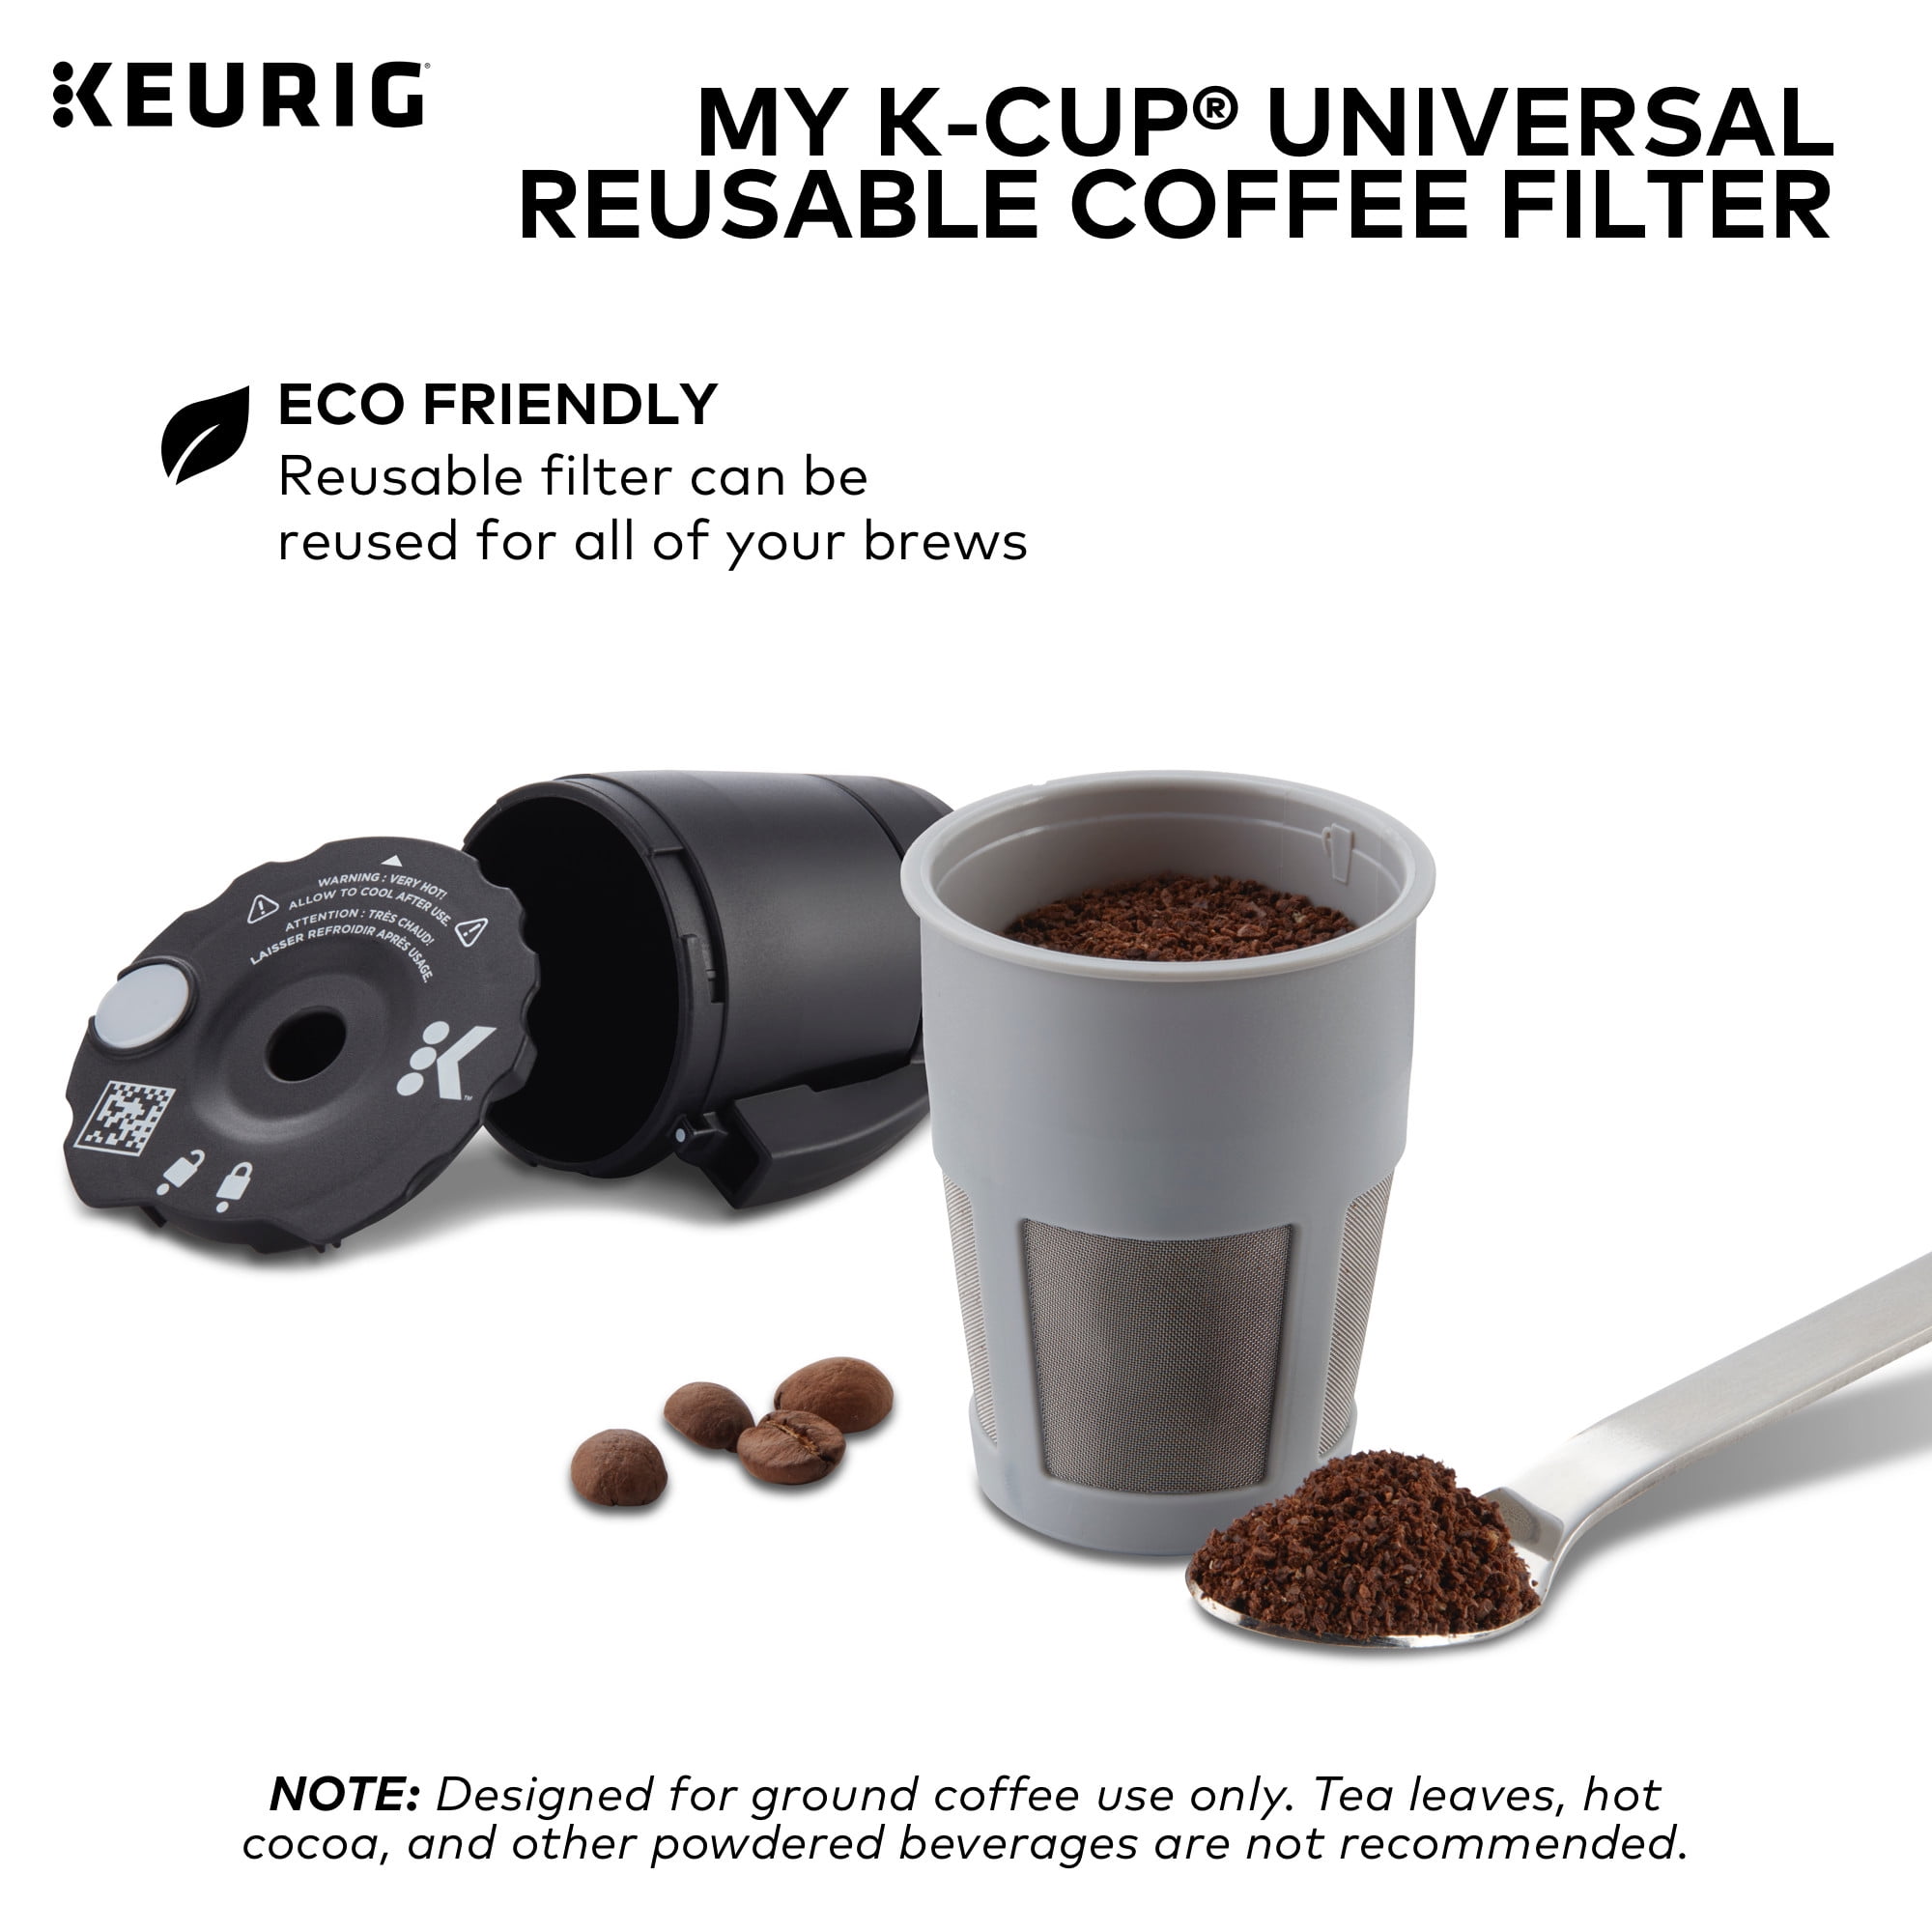 2 Keurig My K-Cup Universal Reusable Ground Coffee Filter All Keurig Compatible 